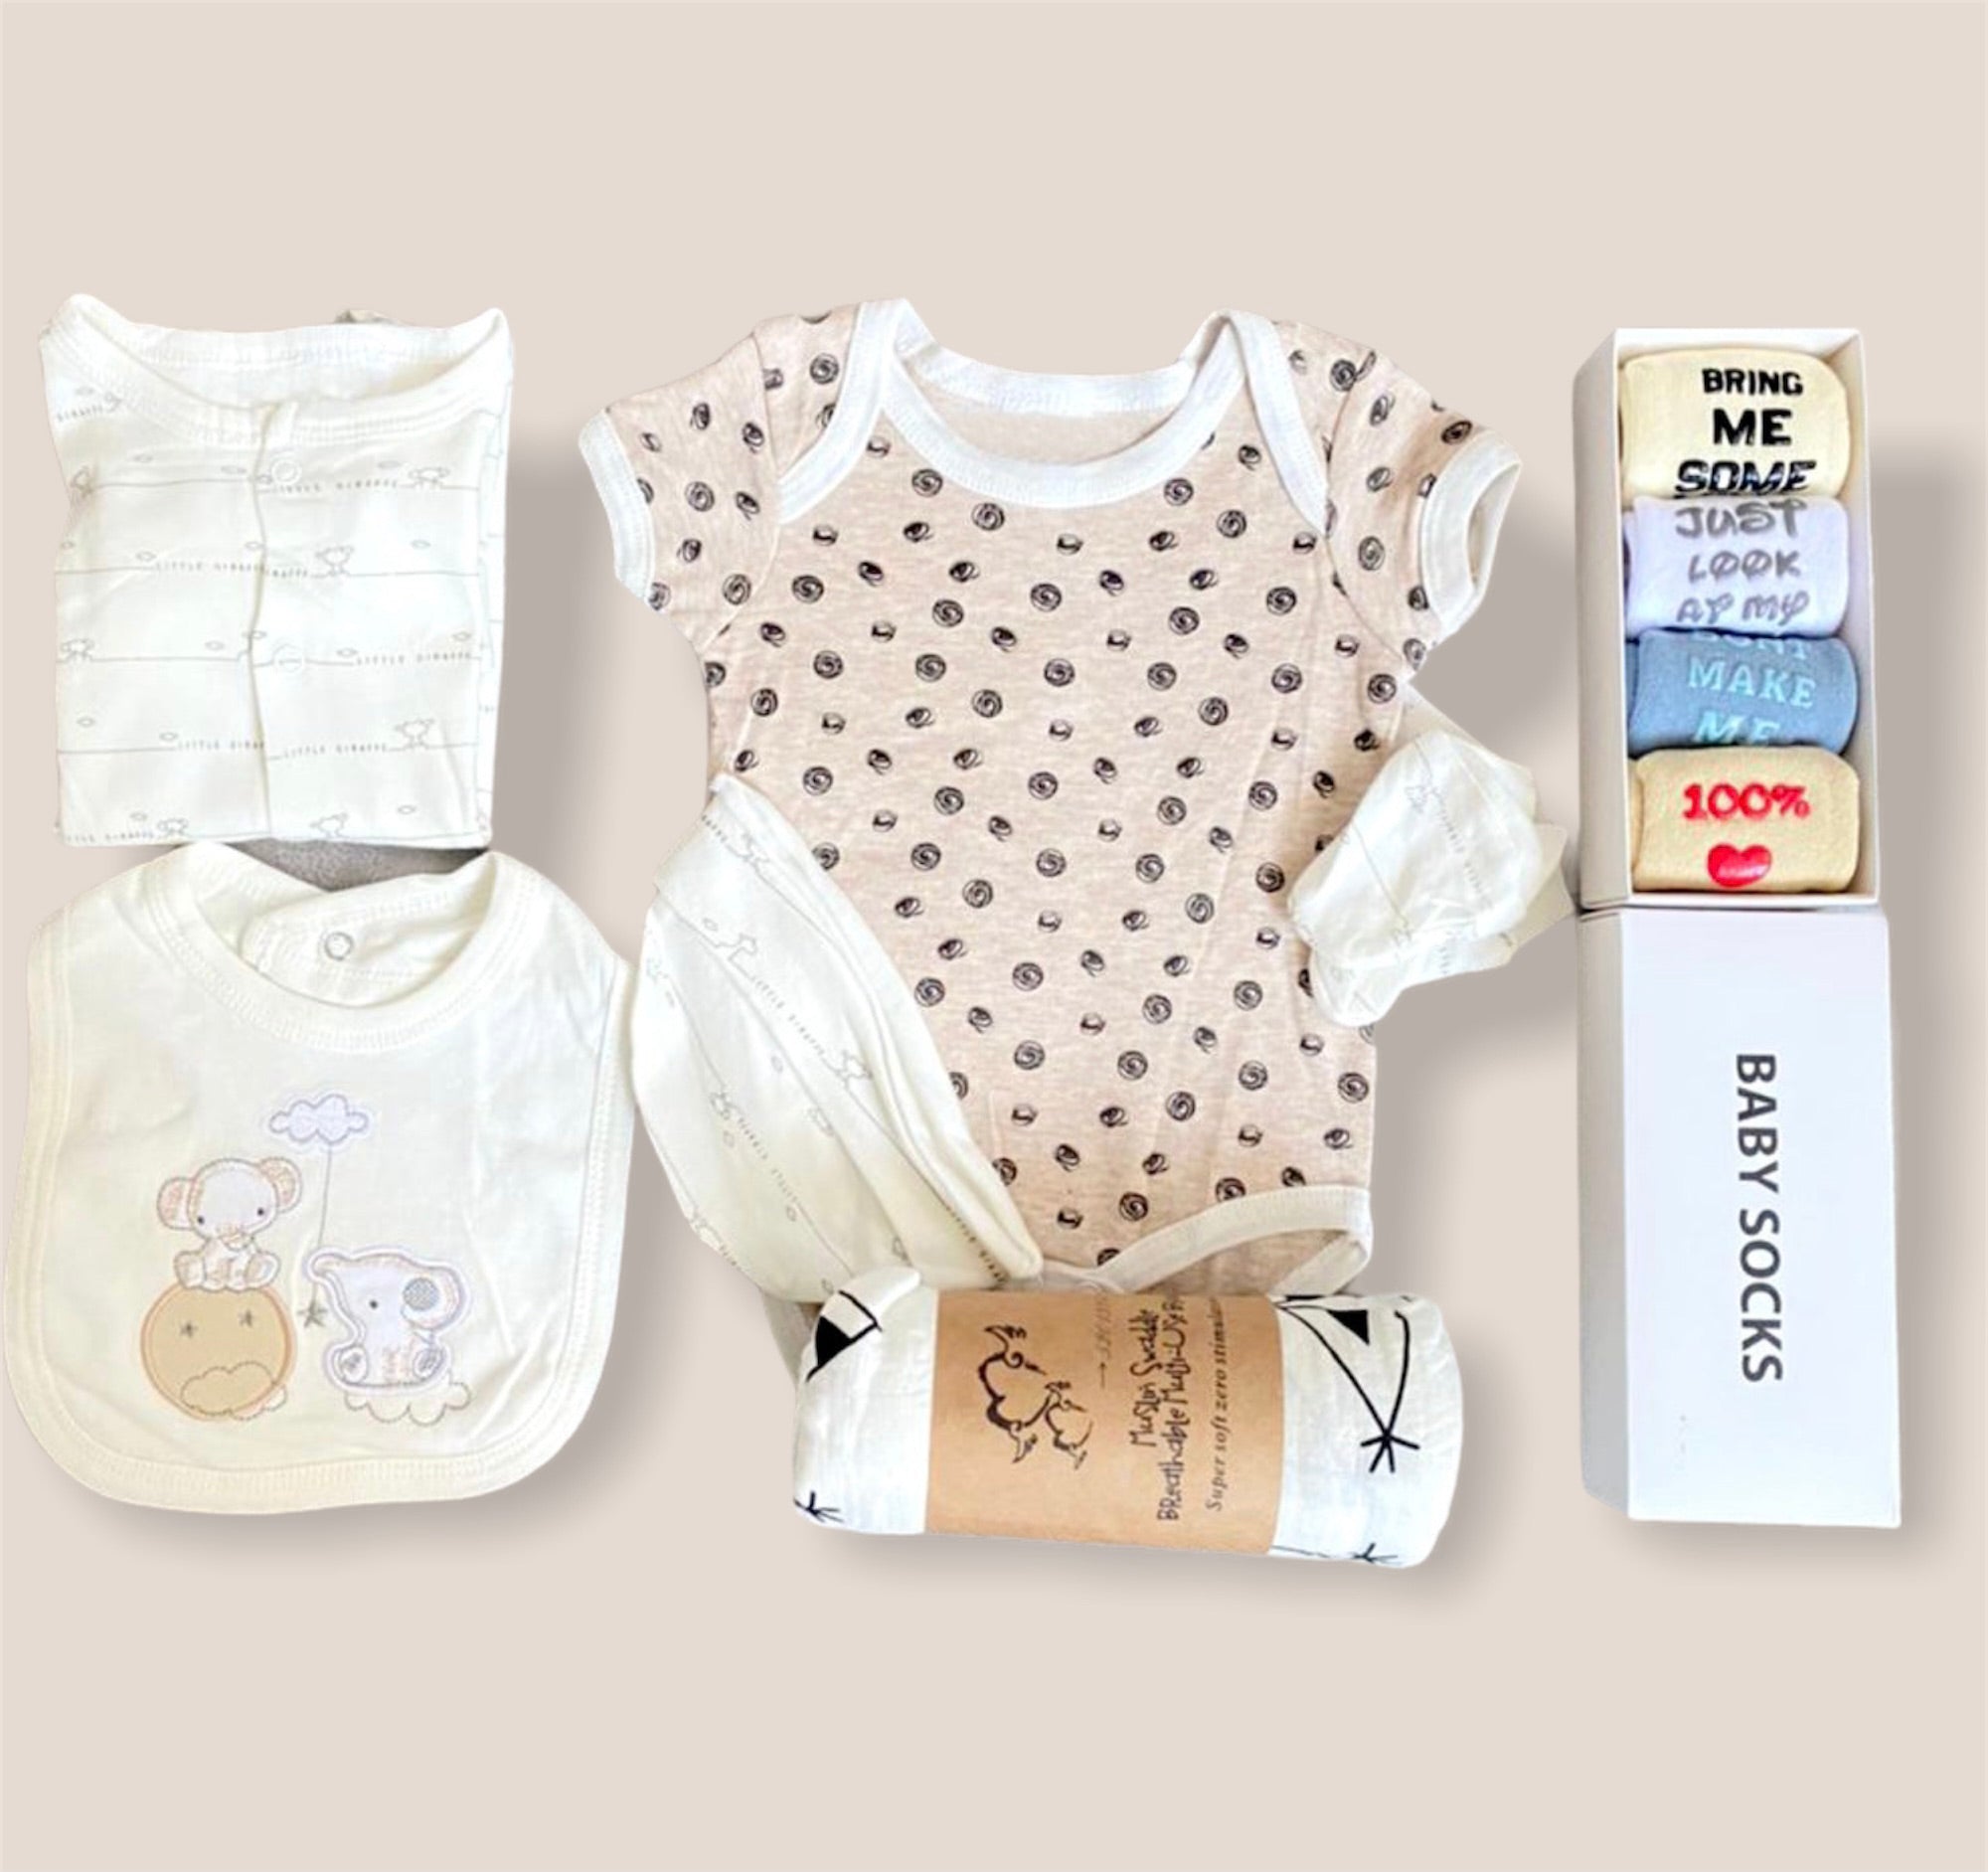 LuLaRoe New Baby Corporate Collection - 4 Pints - eCreamery